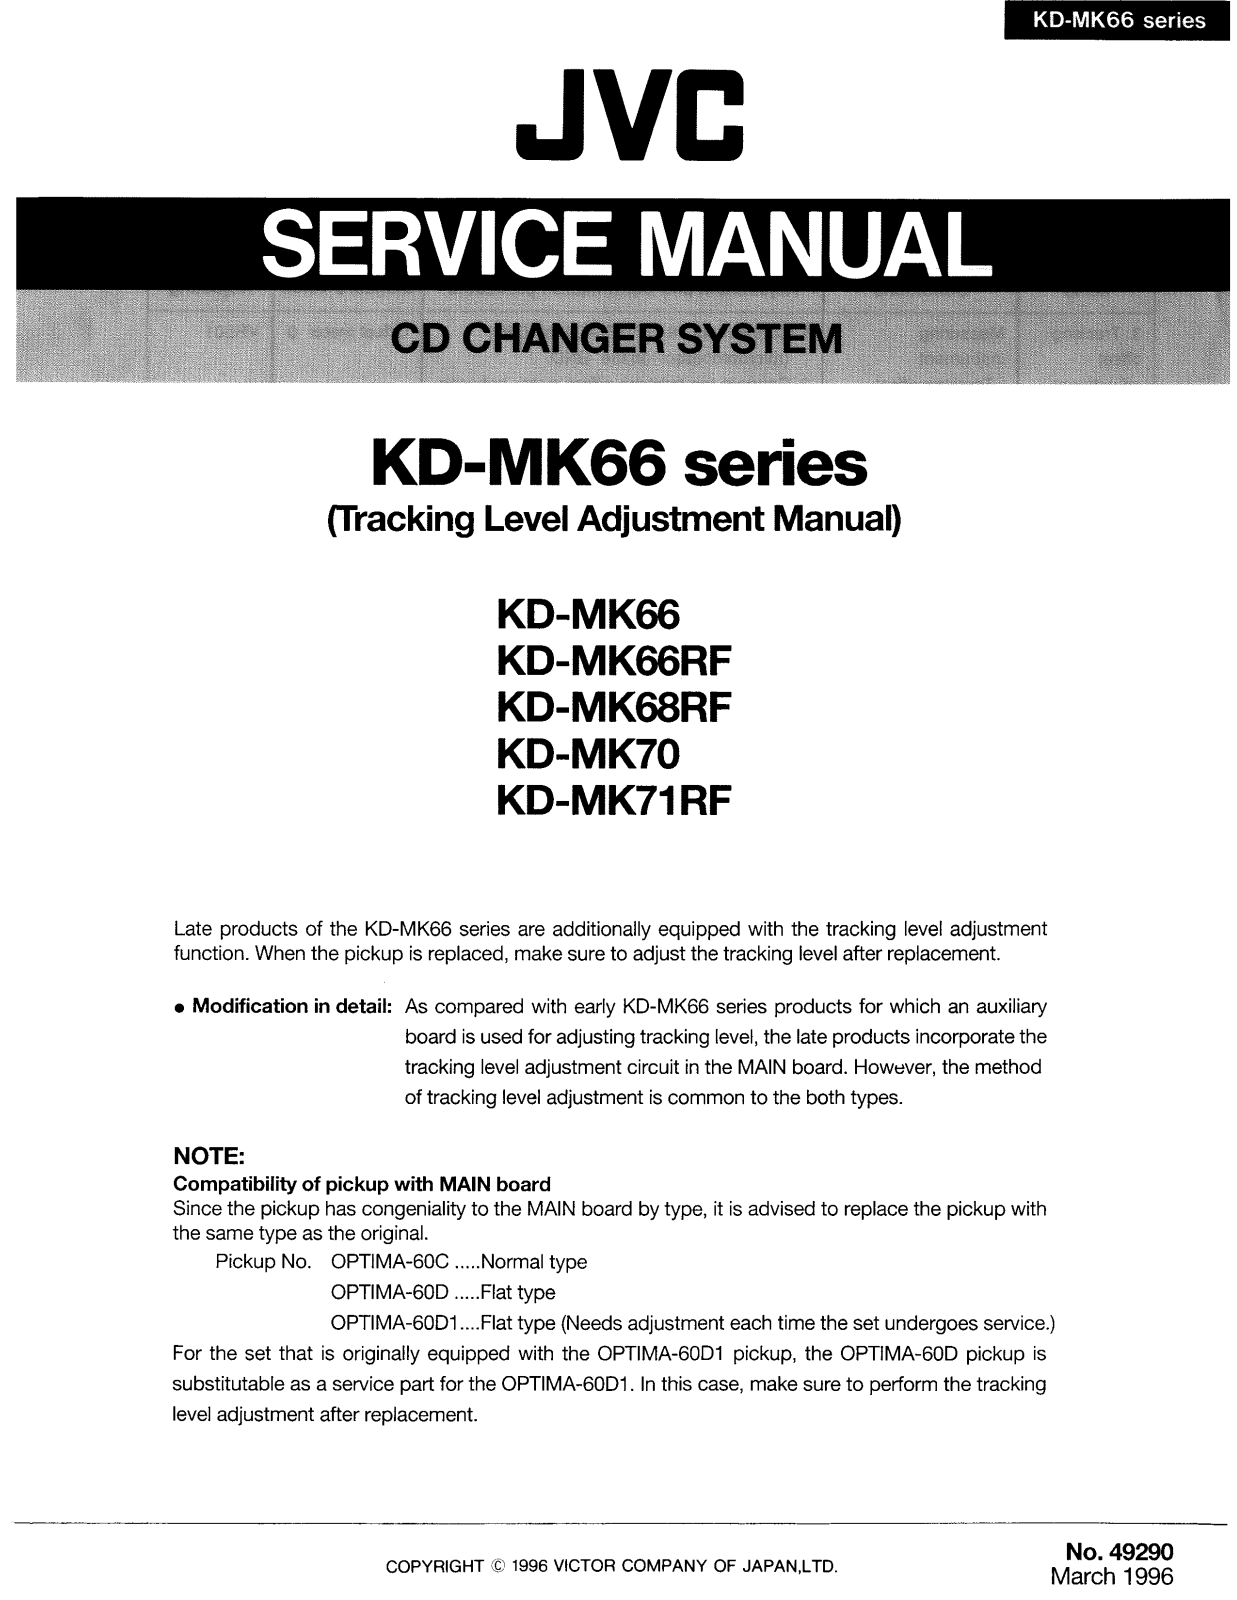 JVC KD-MK66, KD-MK66RF, KD-MK70, KD-MK68RF, KD-MK70RF Service Manual